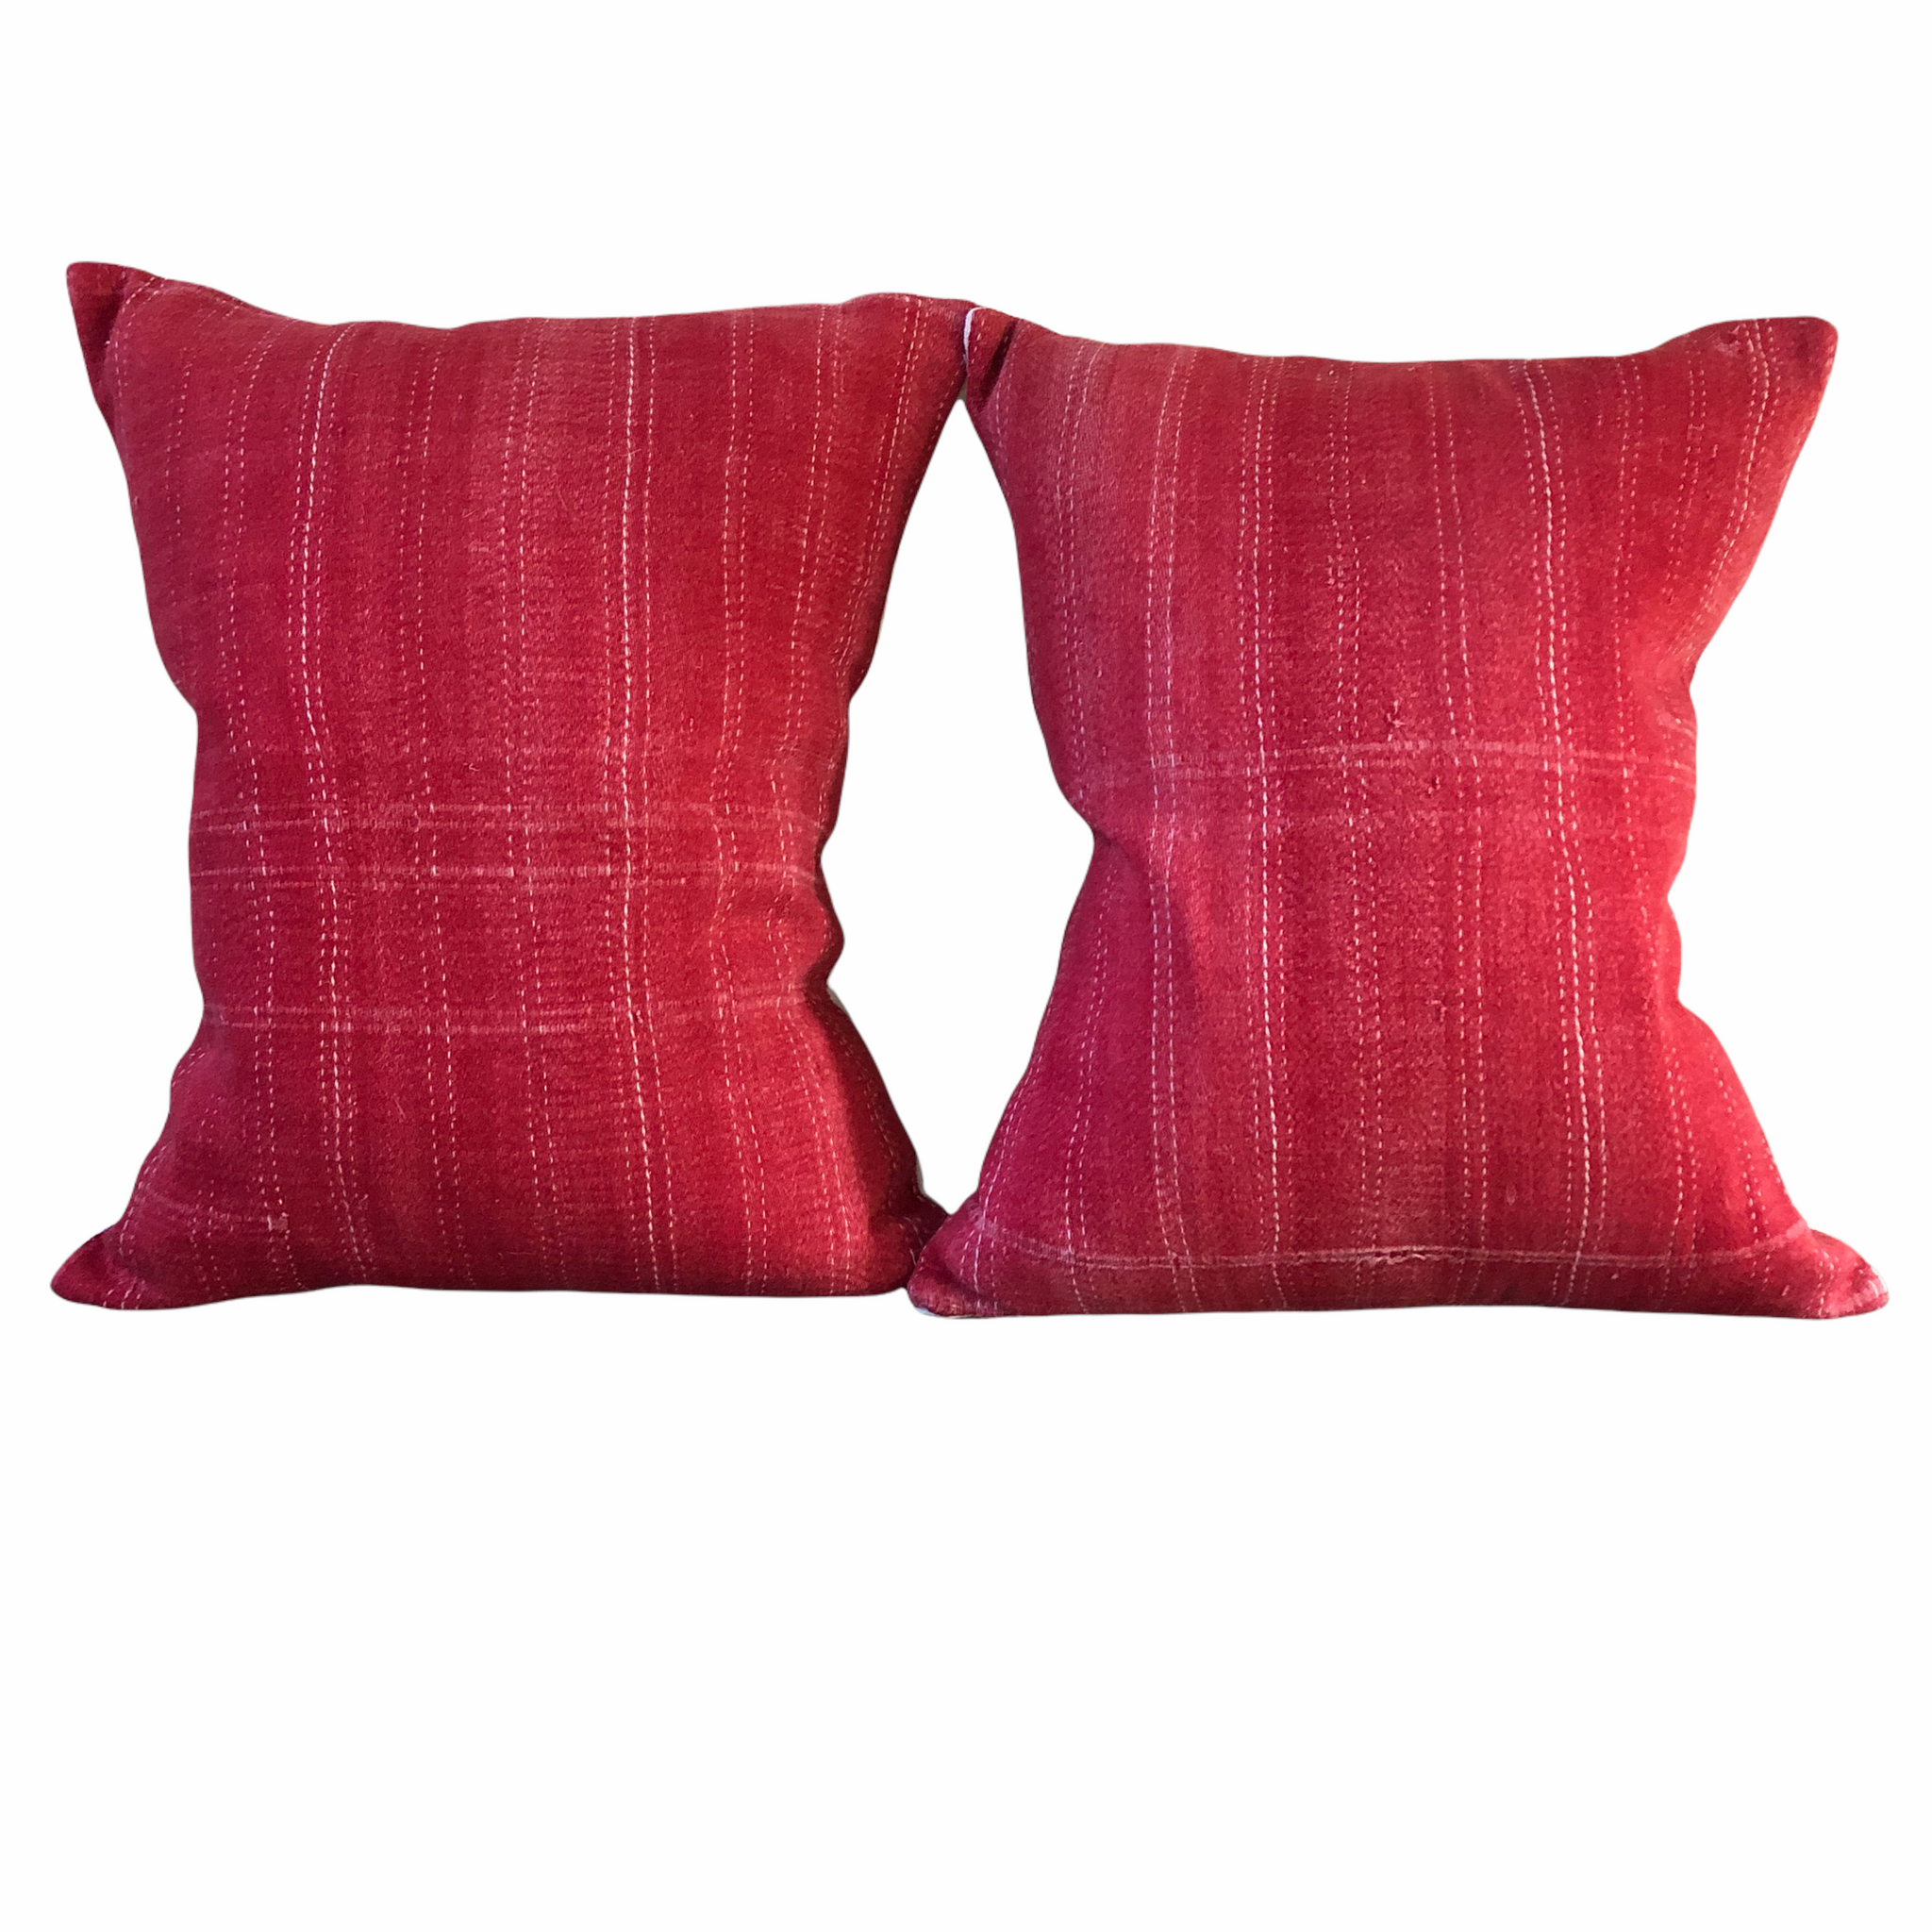 Romanian Ticking Stripe Pillows - A Pair